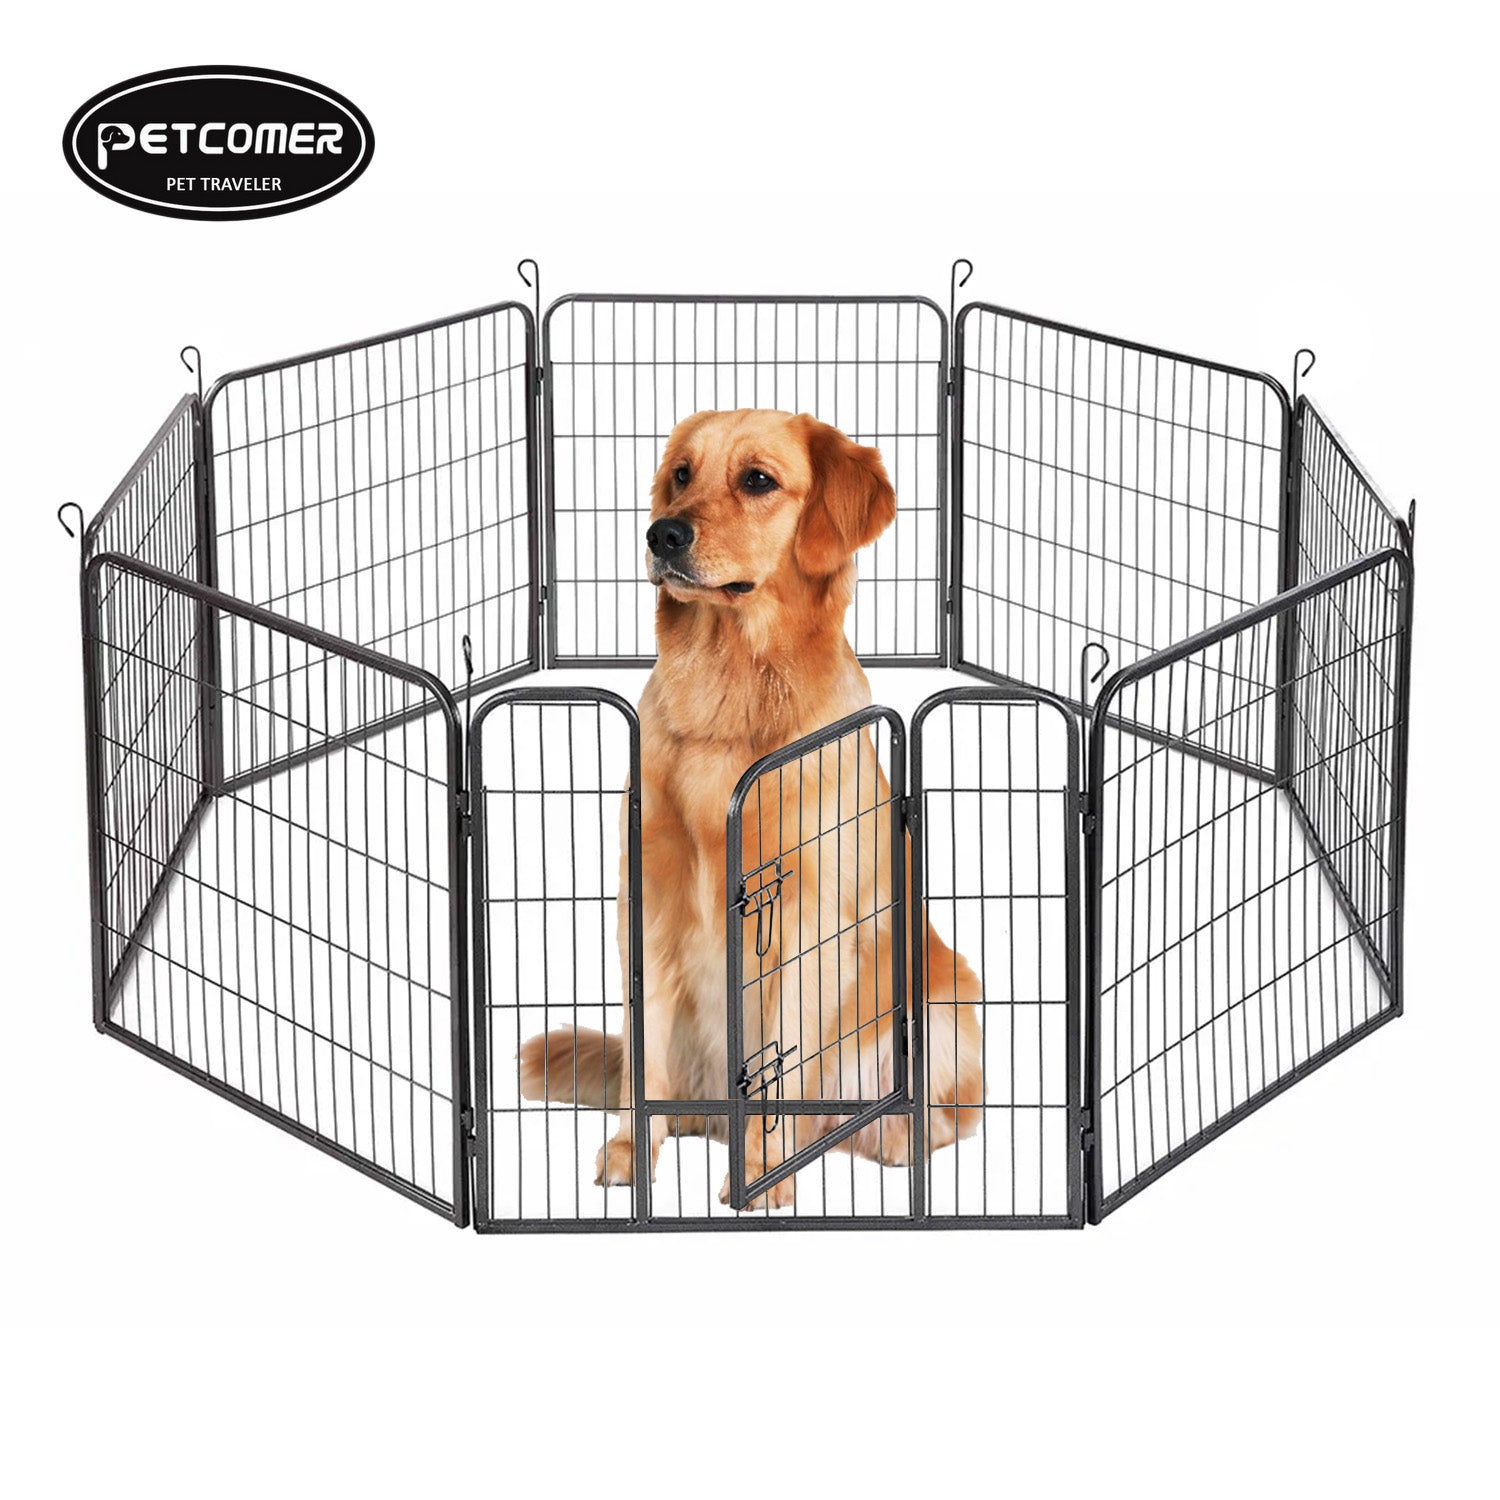 PETCOMER PET TRAVELER Dog Playpen Kennels, Folding Metal Pet Kennel Wire Cage, 8 Panels, 31.5"L x 27.5"W x 34.3"H